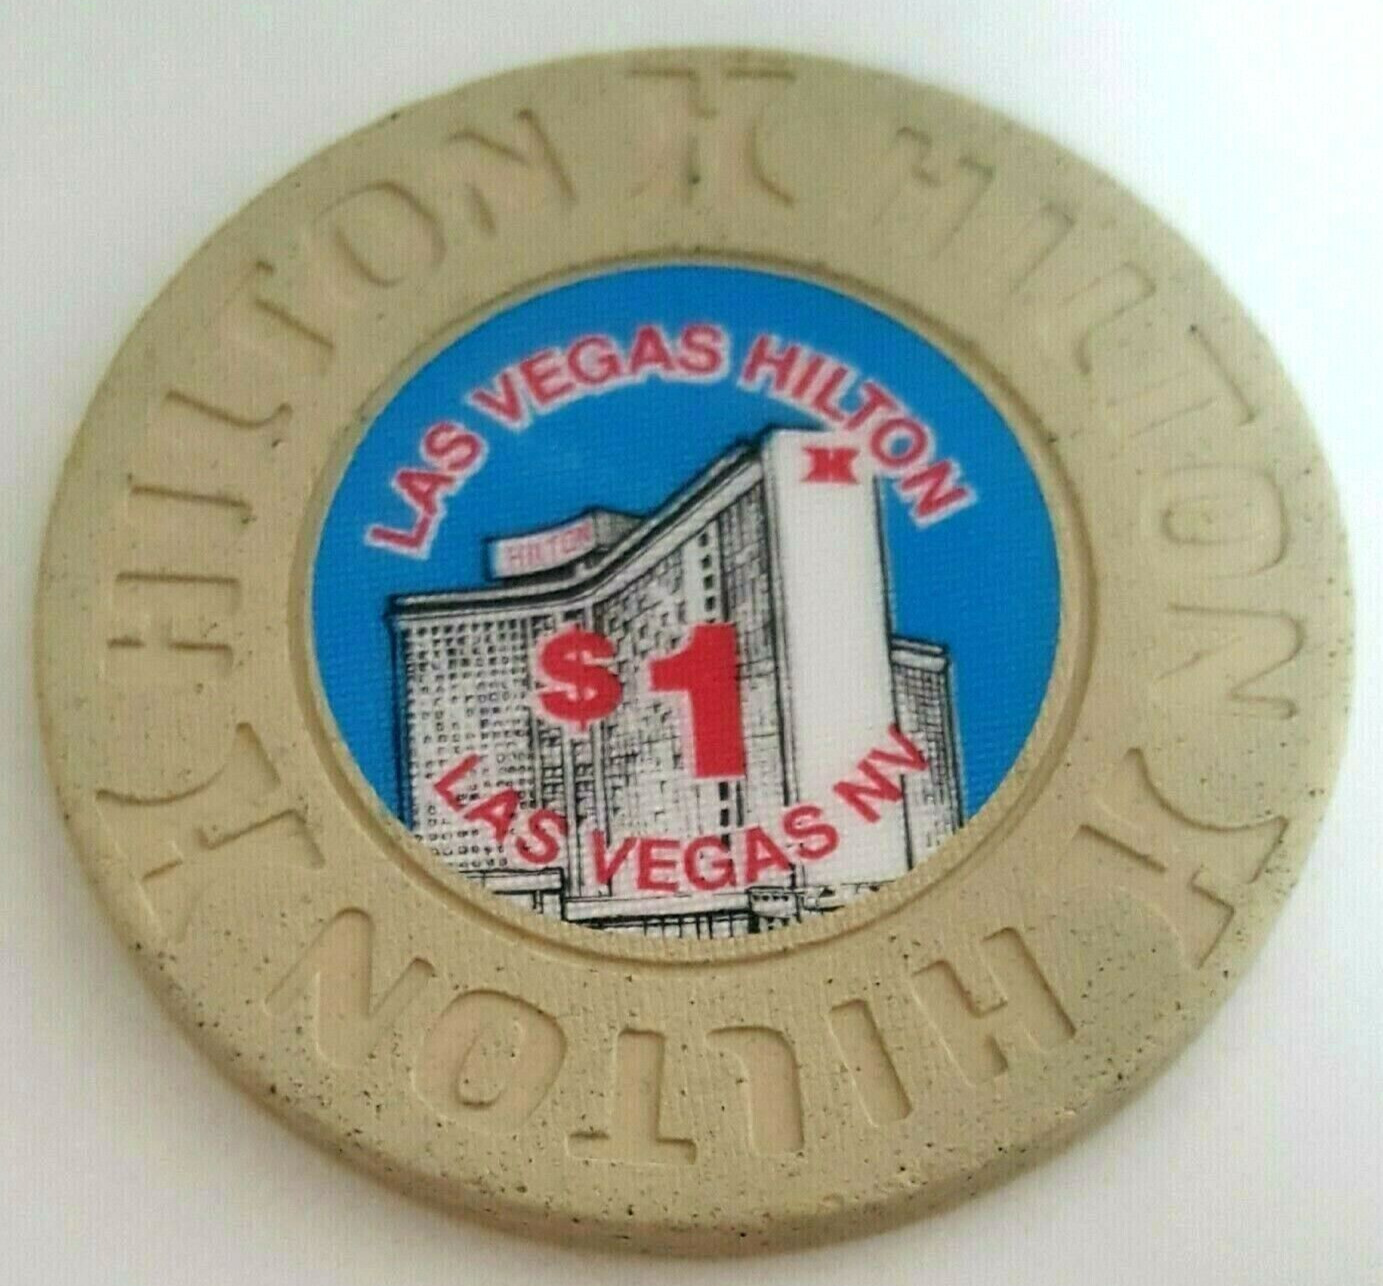 $1 Las Vegas Hilton 1991 Casino Chip